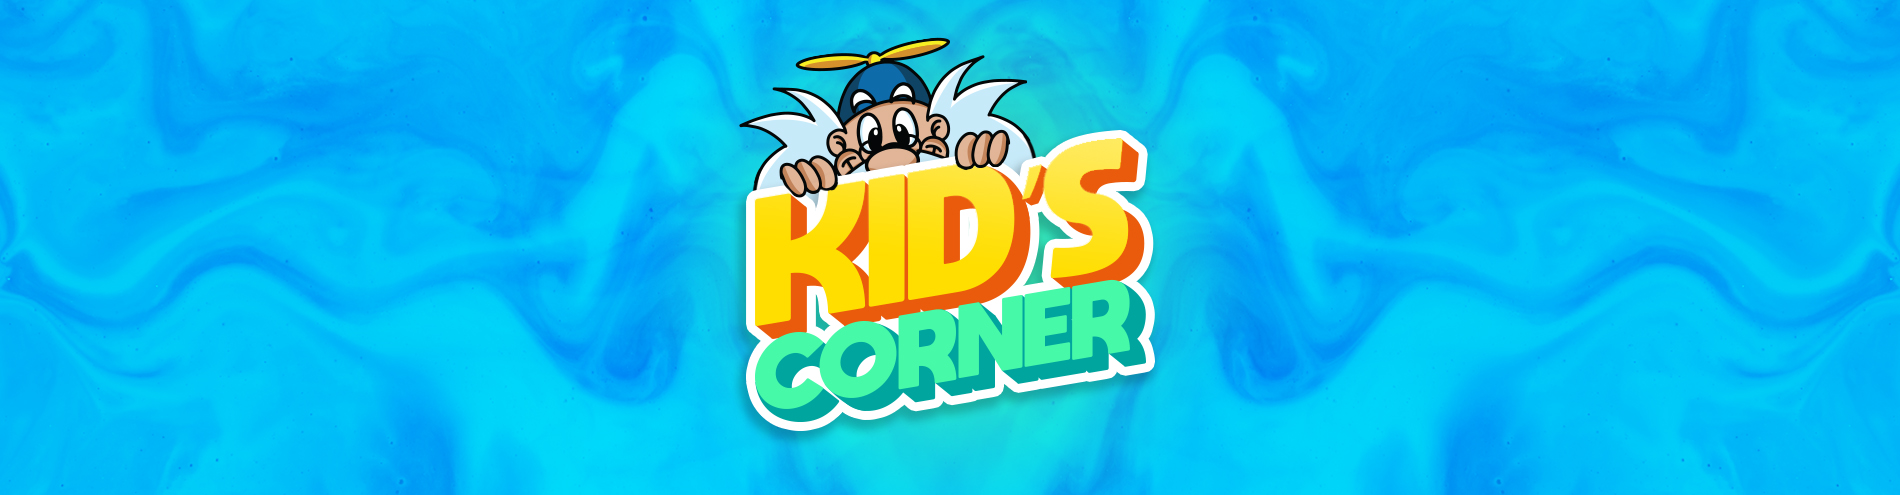 Kid's Corner Header